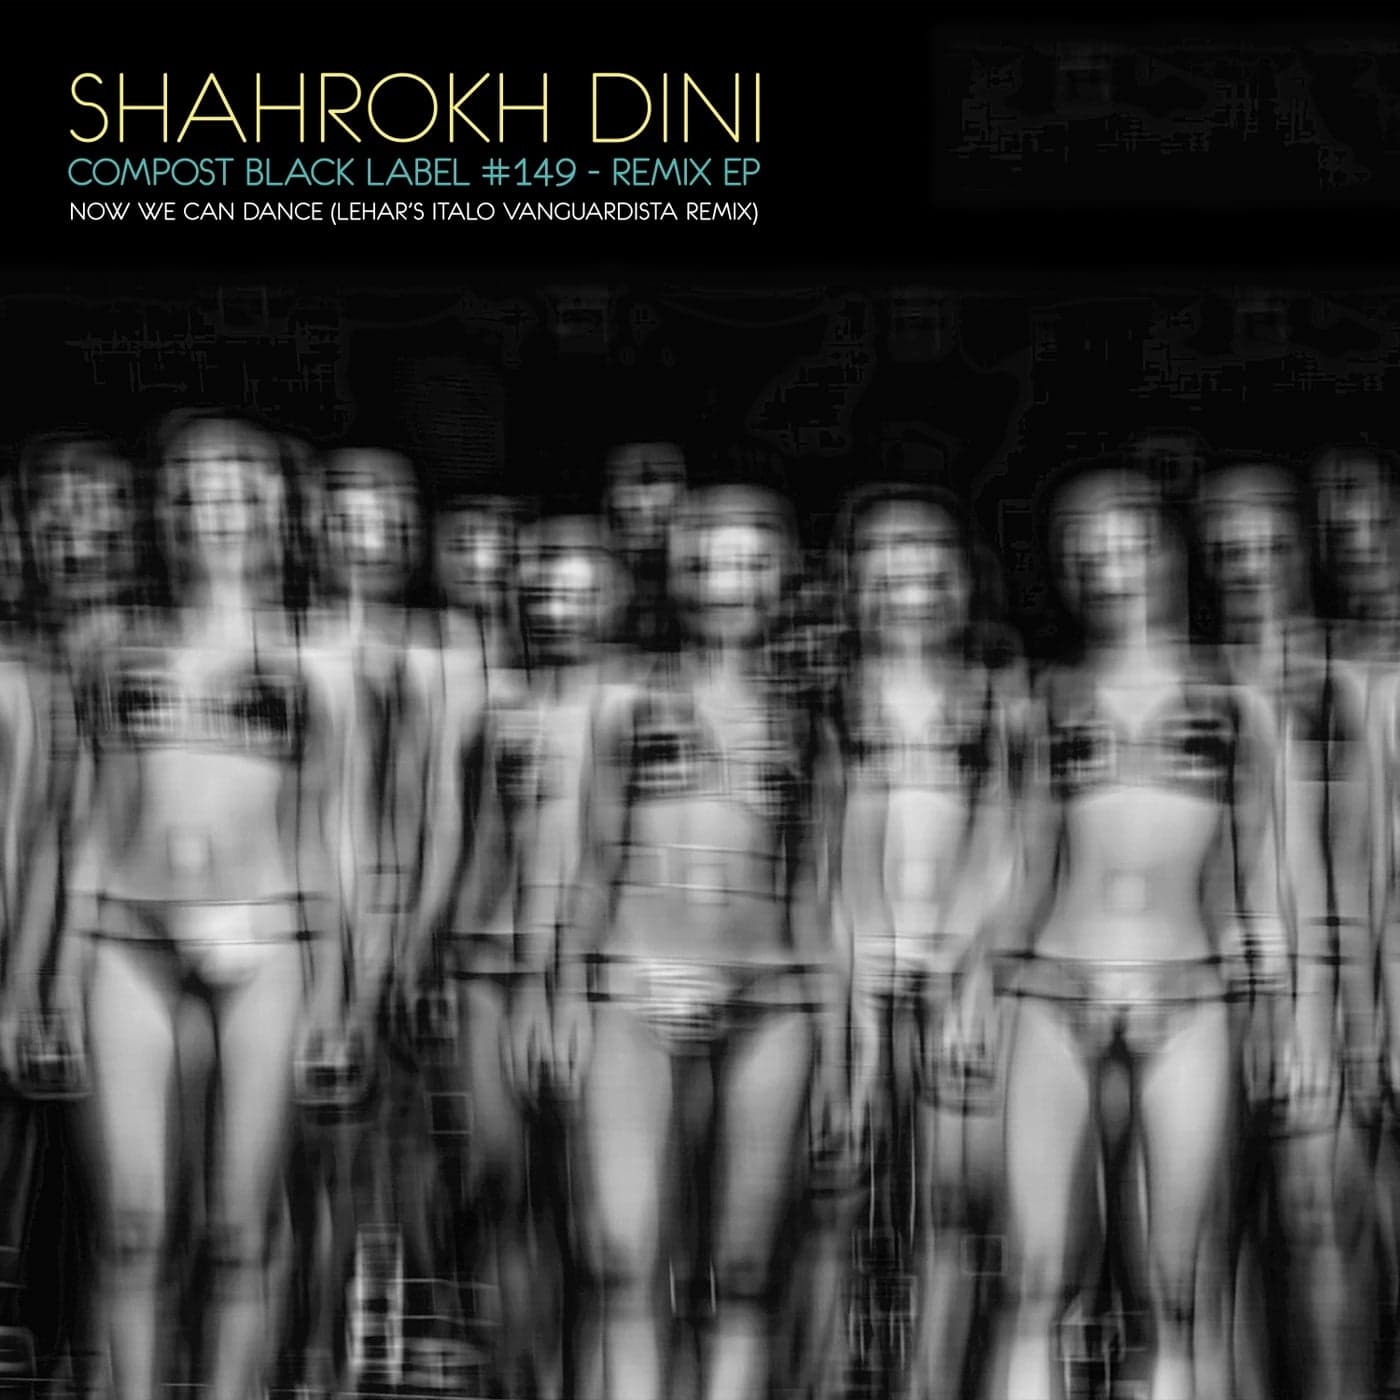 image cover: Shahrokh Dini, Illinois - Now We Can Dance - Lehar's Italo Vanguardista Remix / CPT6126